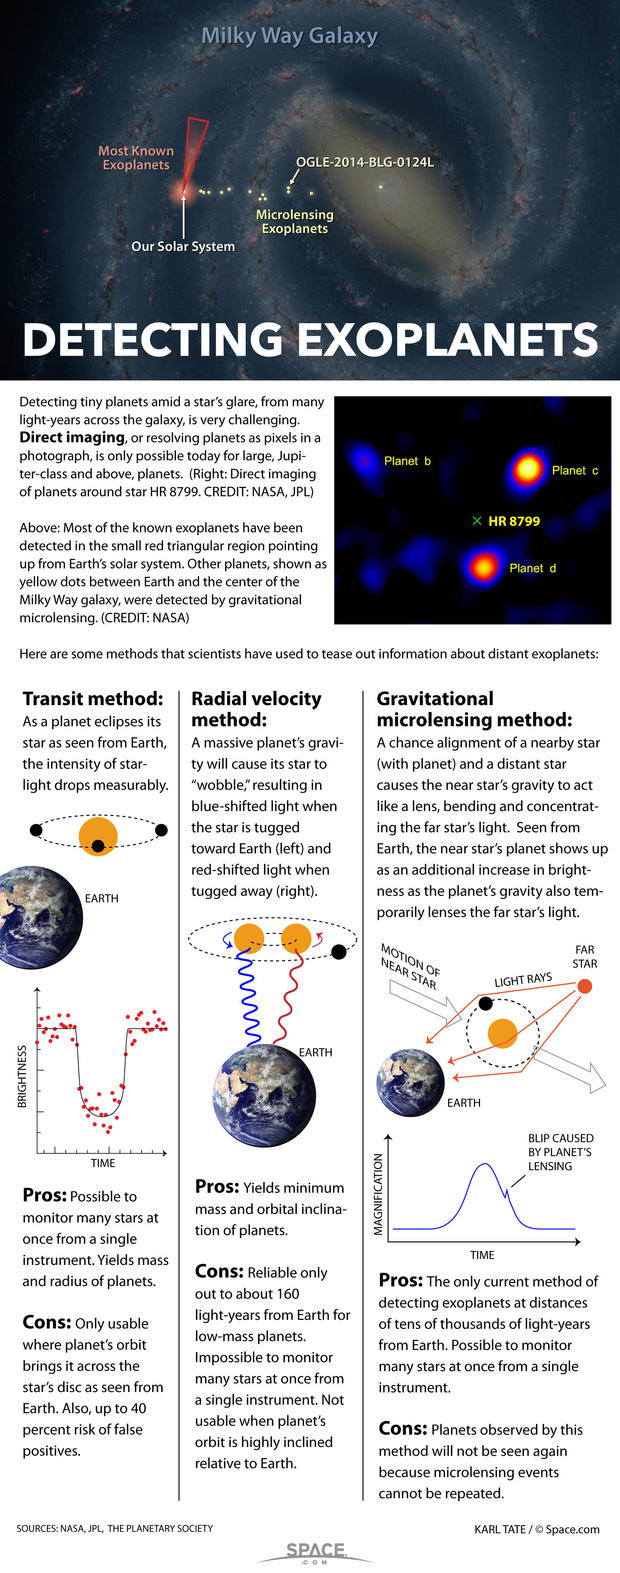 exoplanet-detection-methods-150812b-02.jpg 